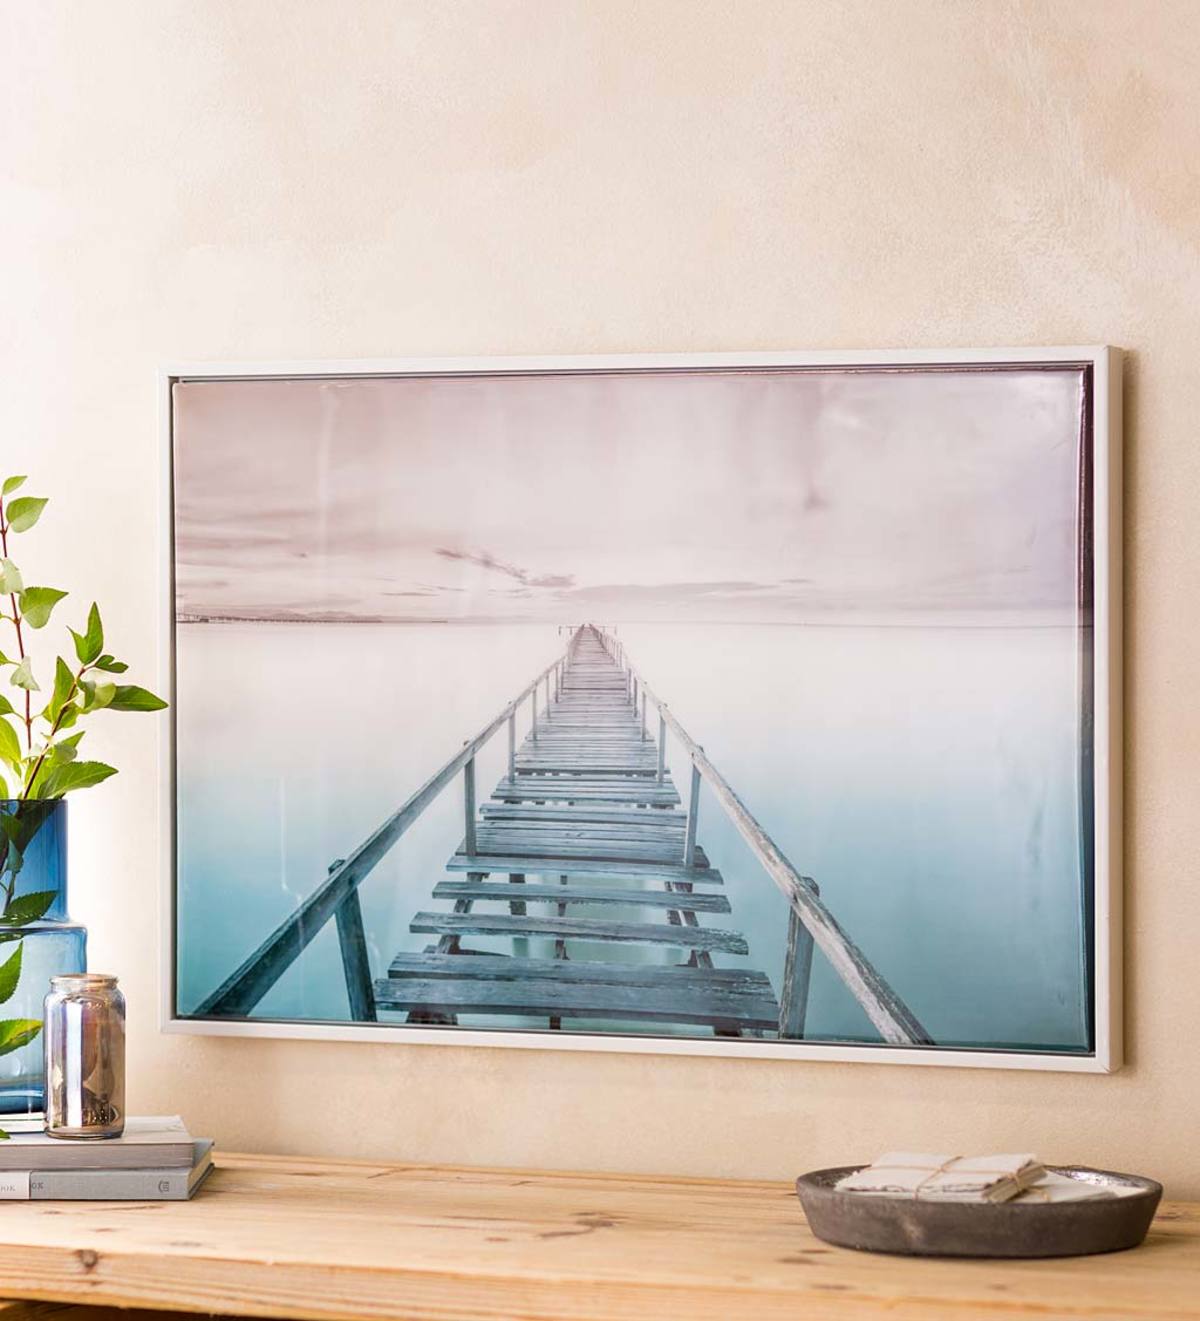 Framed Pier Photo on Canvas Wall Art